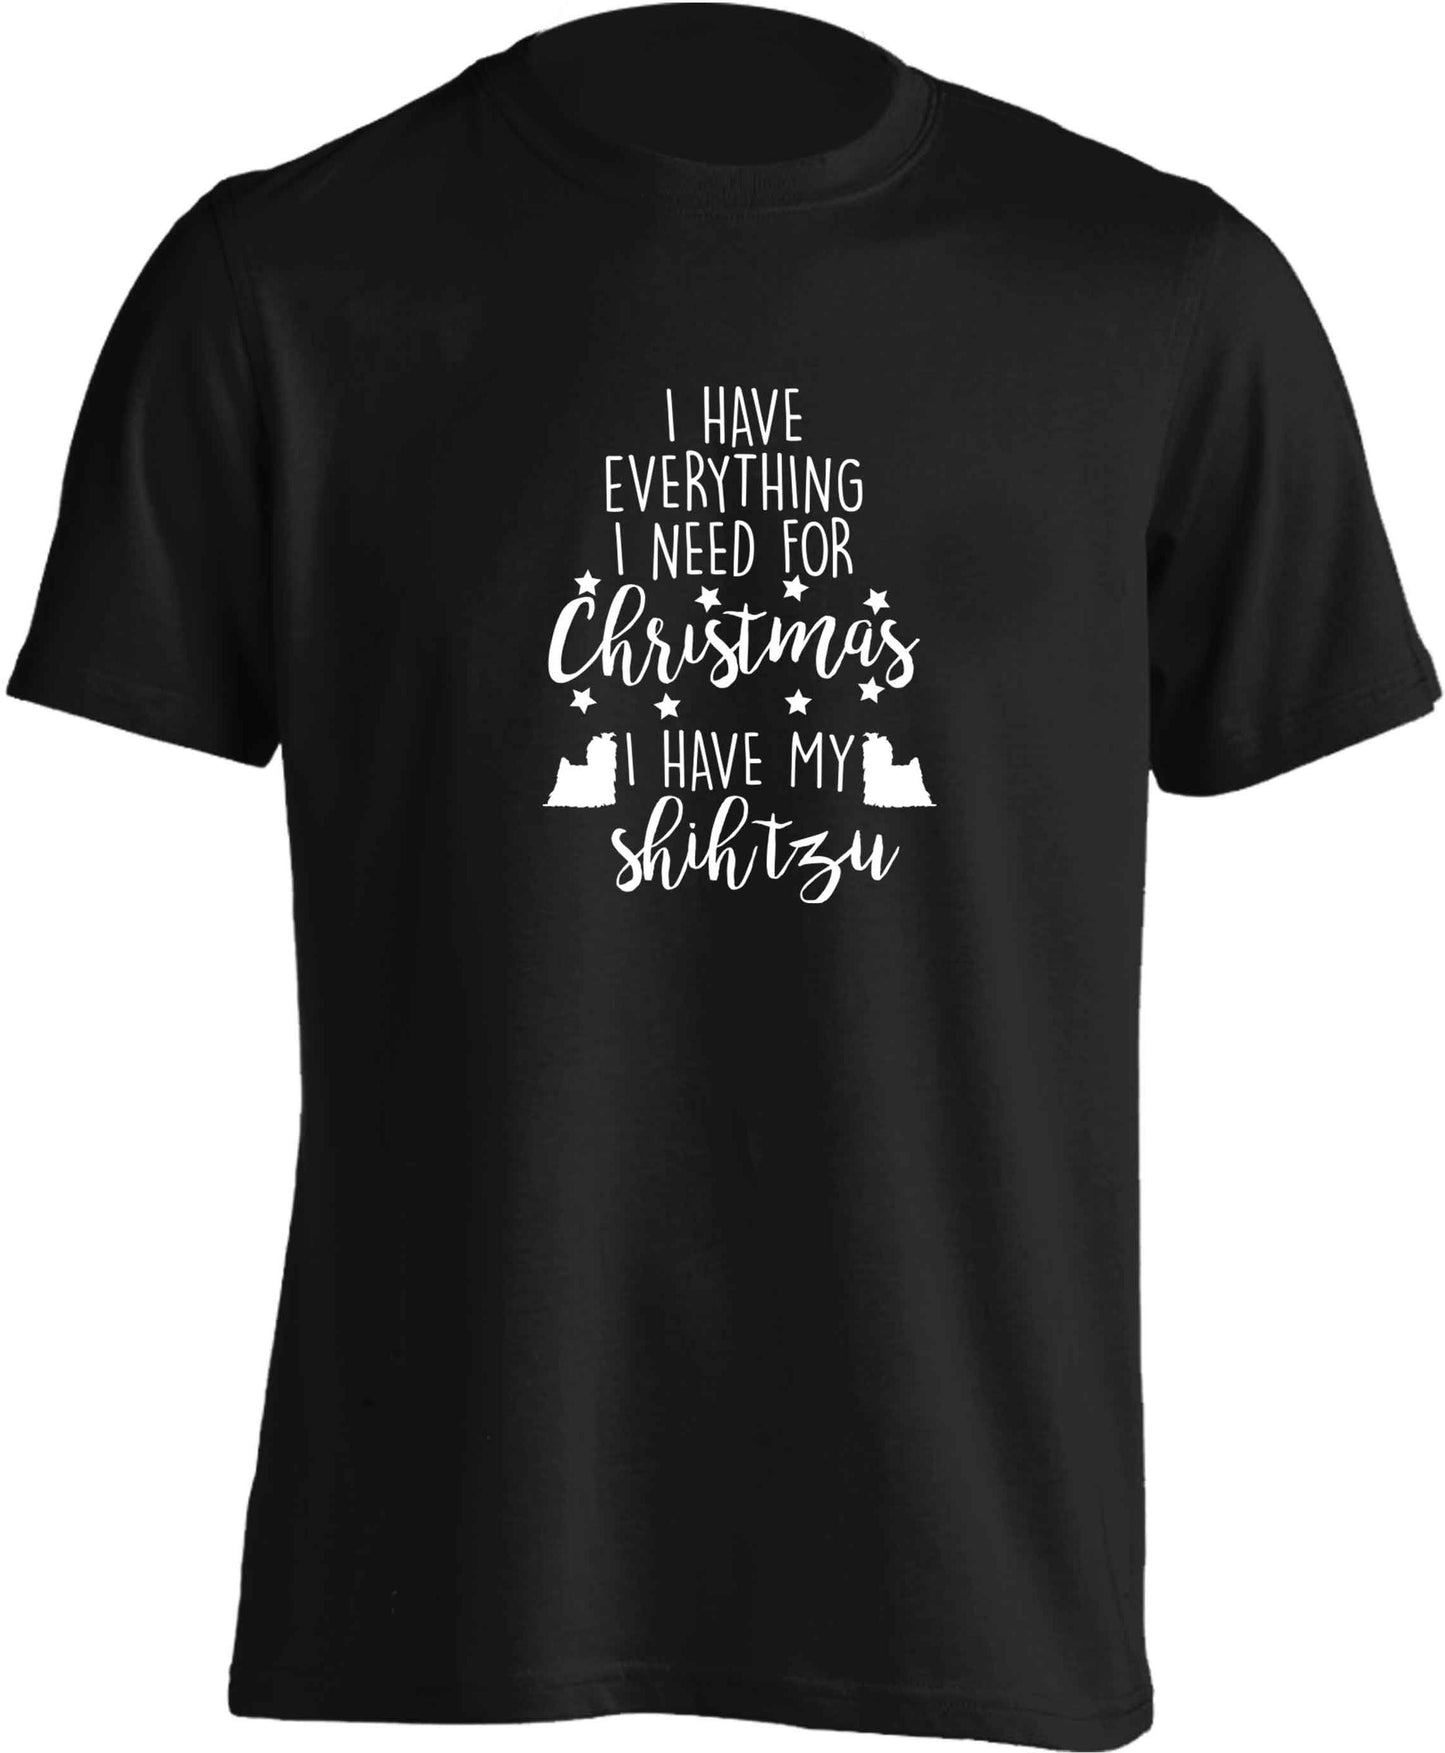 I have everything I need for Christmas I have my shih tzu adults unisex black Tshirt 2XL